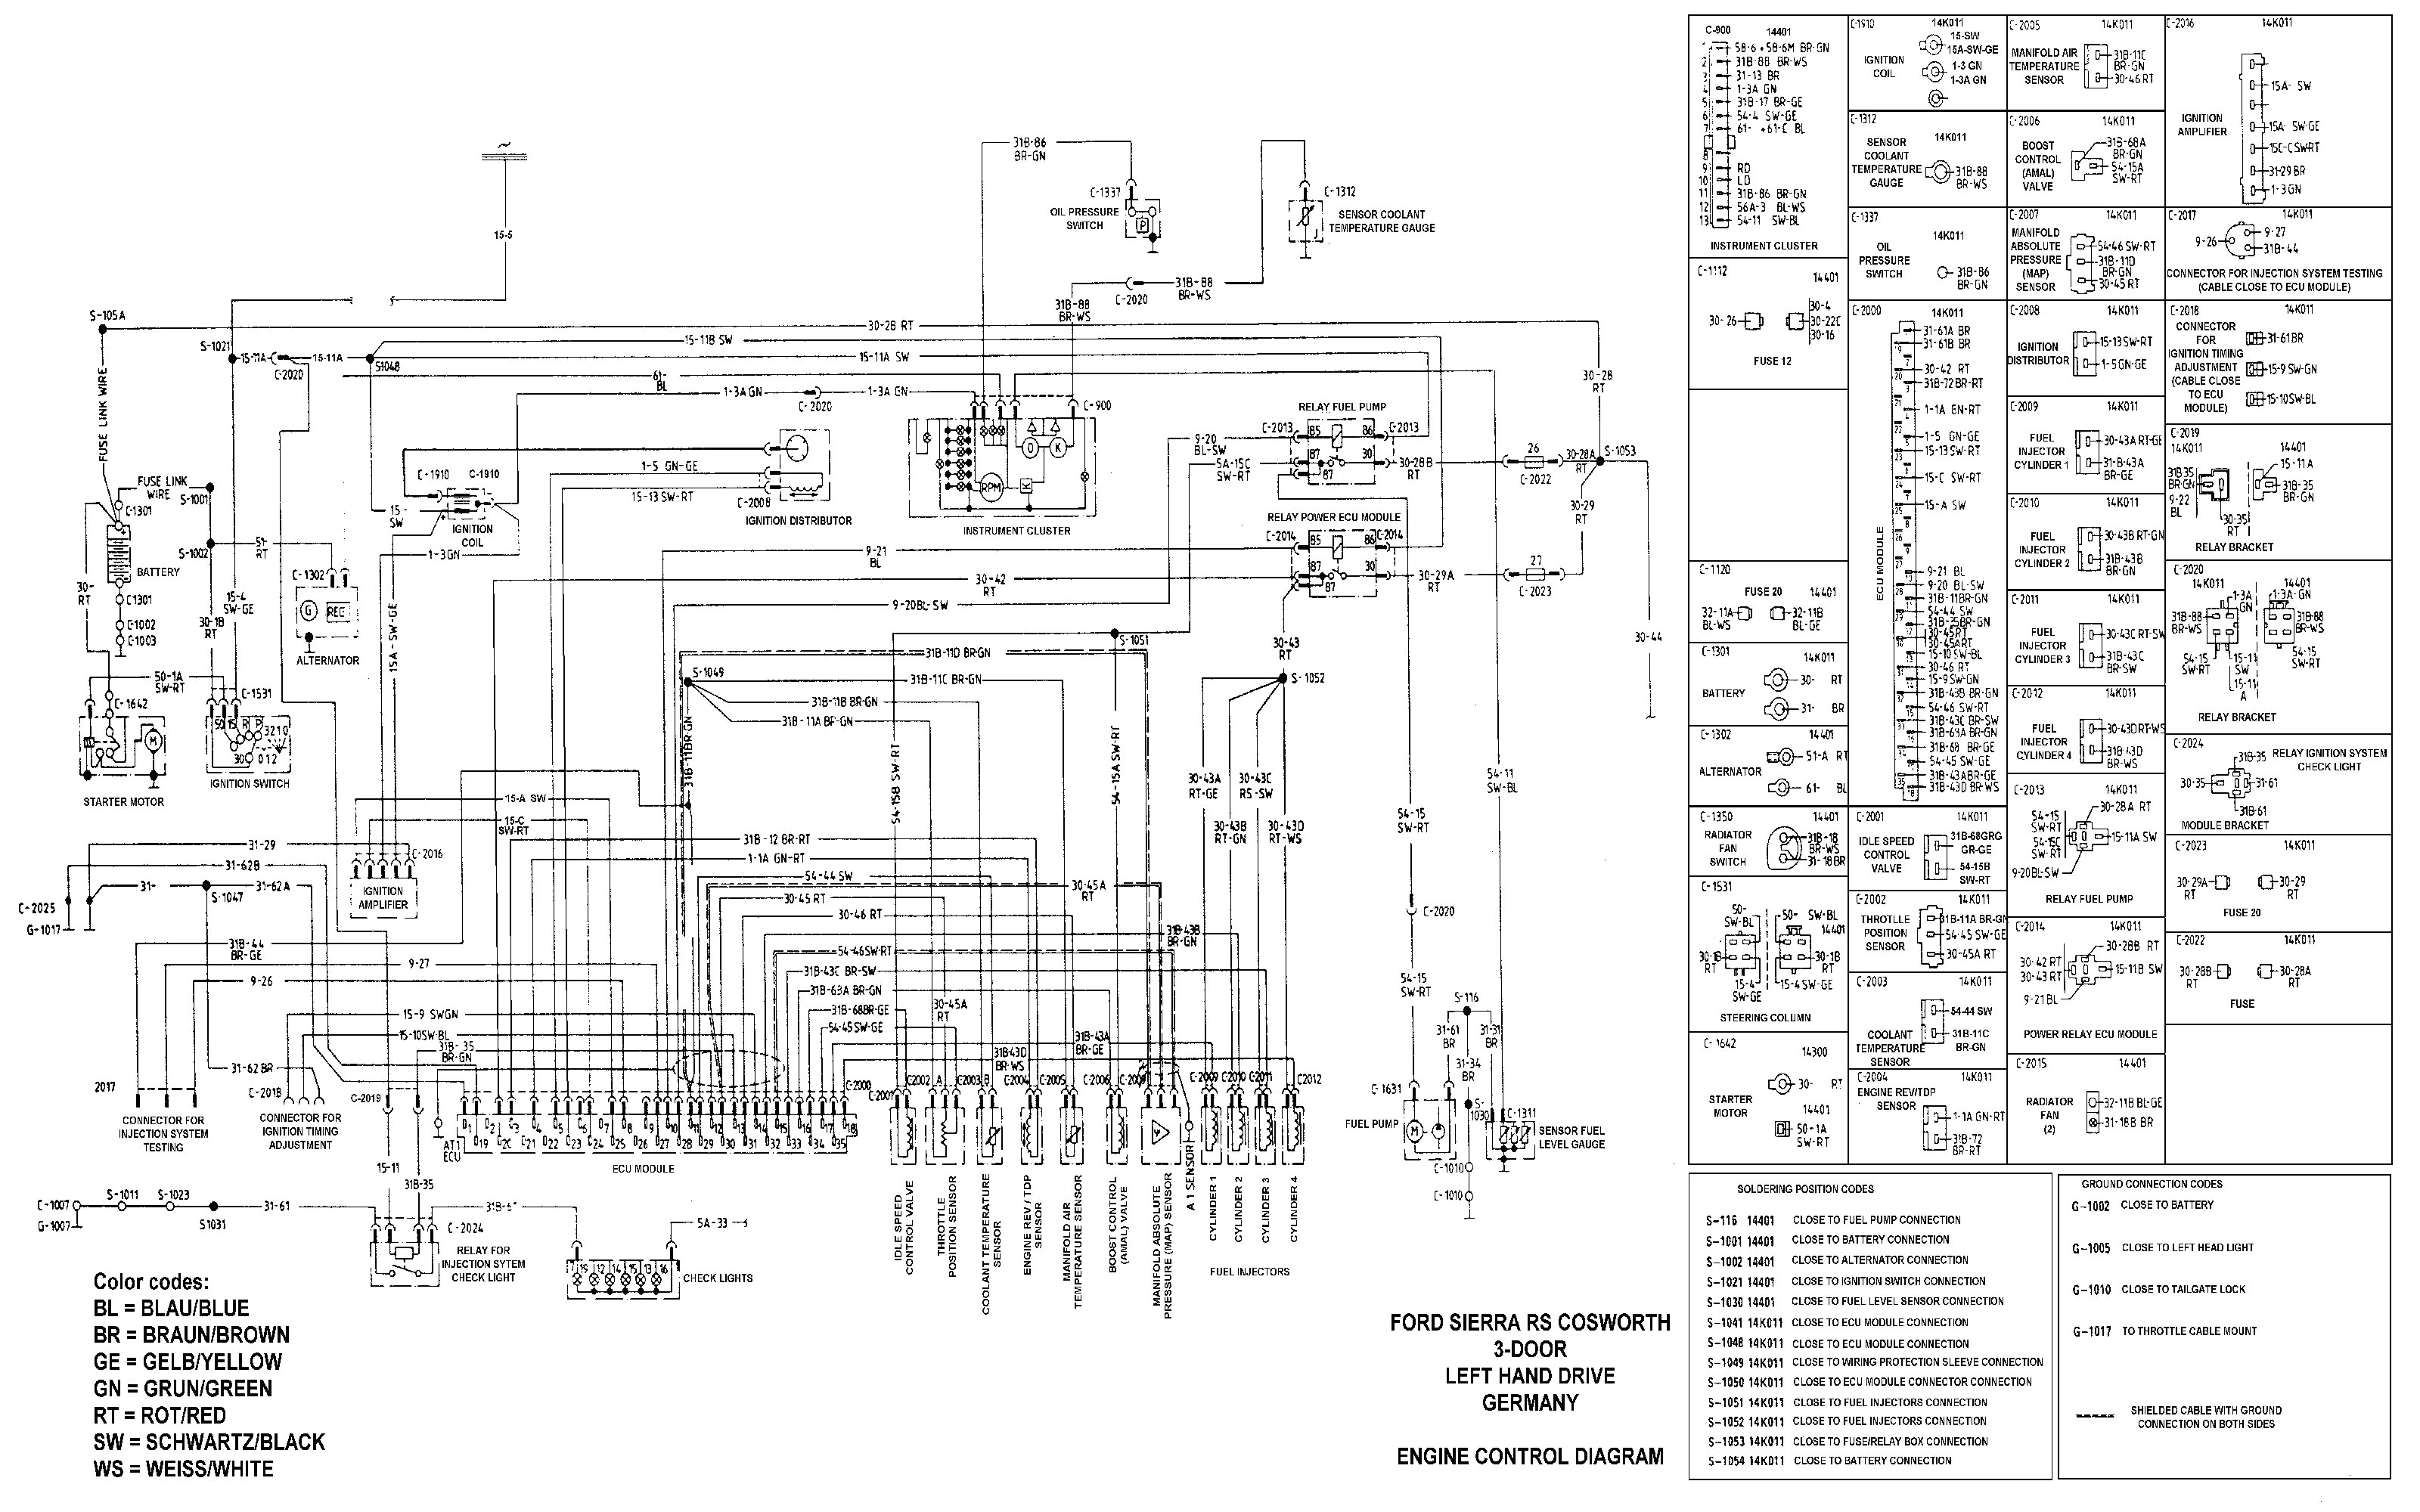 ford ecu wiring diagram wiring diagram page ford festiva ecu wiring diagram wiring diagram sheet ford